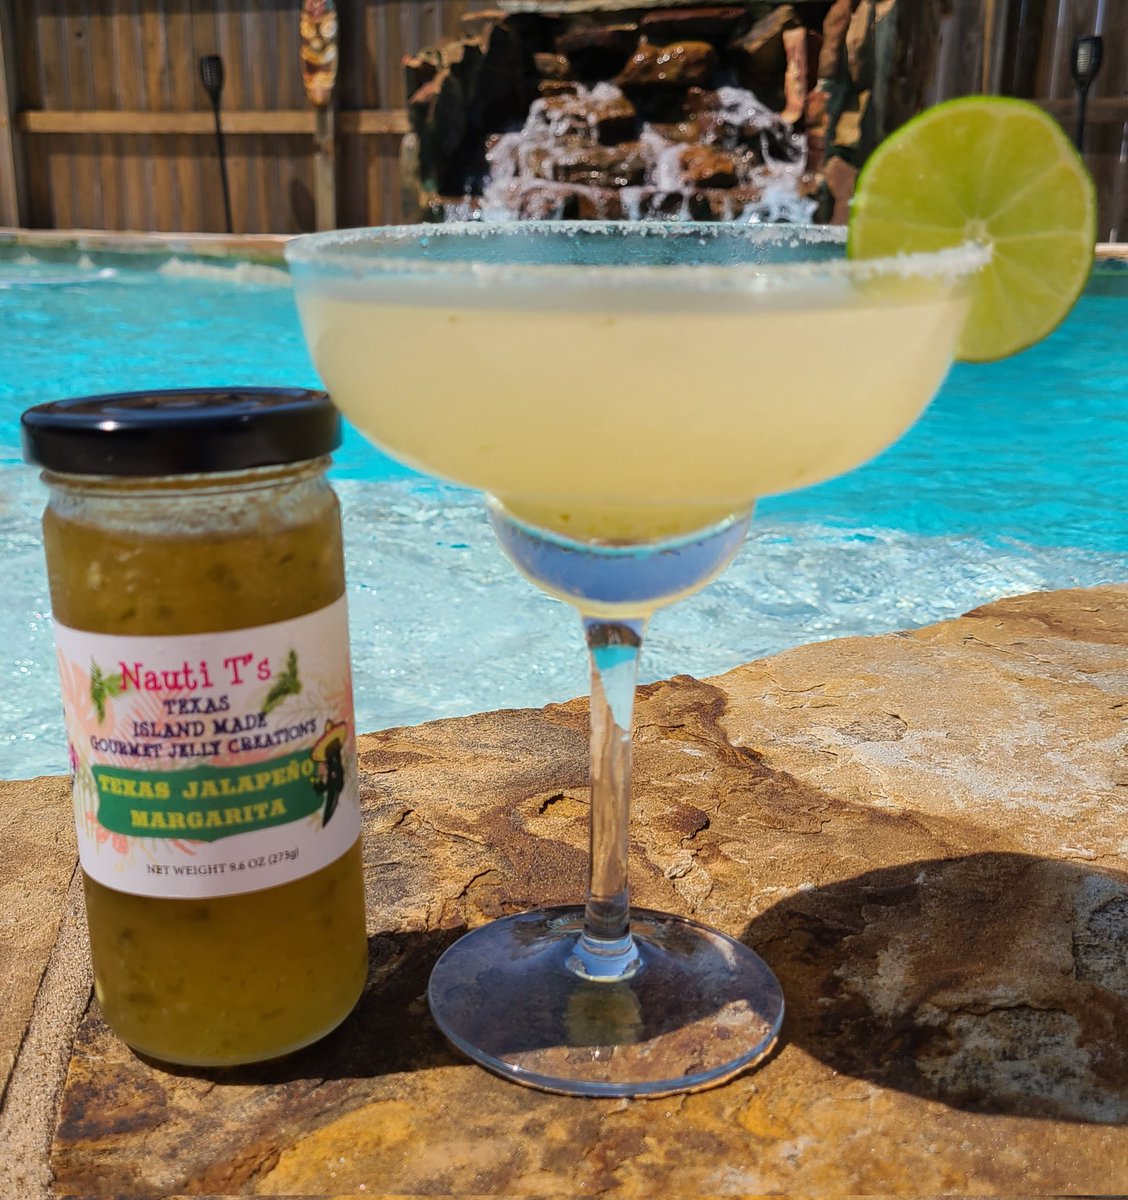 Happy National Margarita day!
#MargaritaDay #cheers #Love #drinks